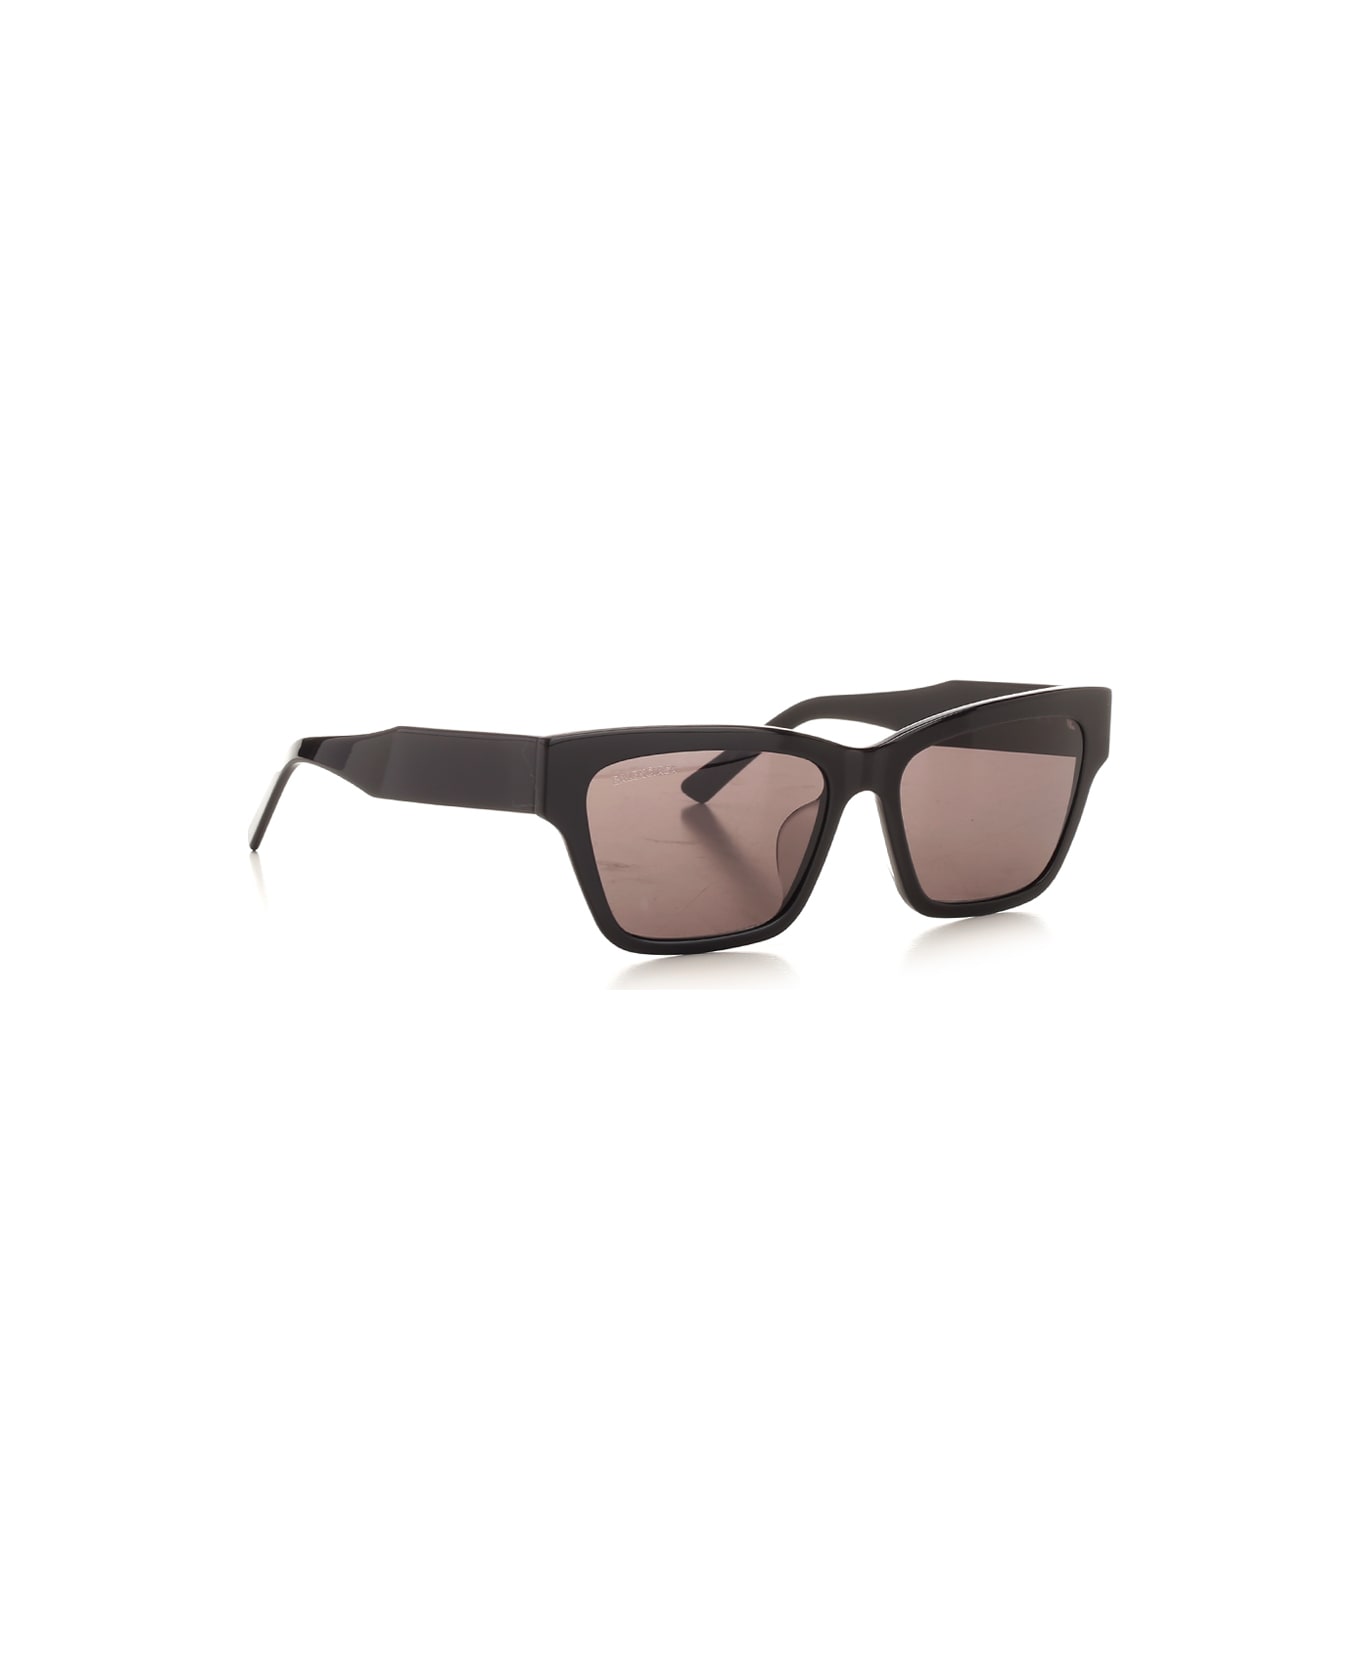 Balenciaga Eyewear Square Frame Sunglasses - Black